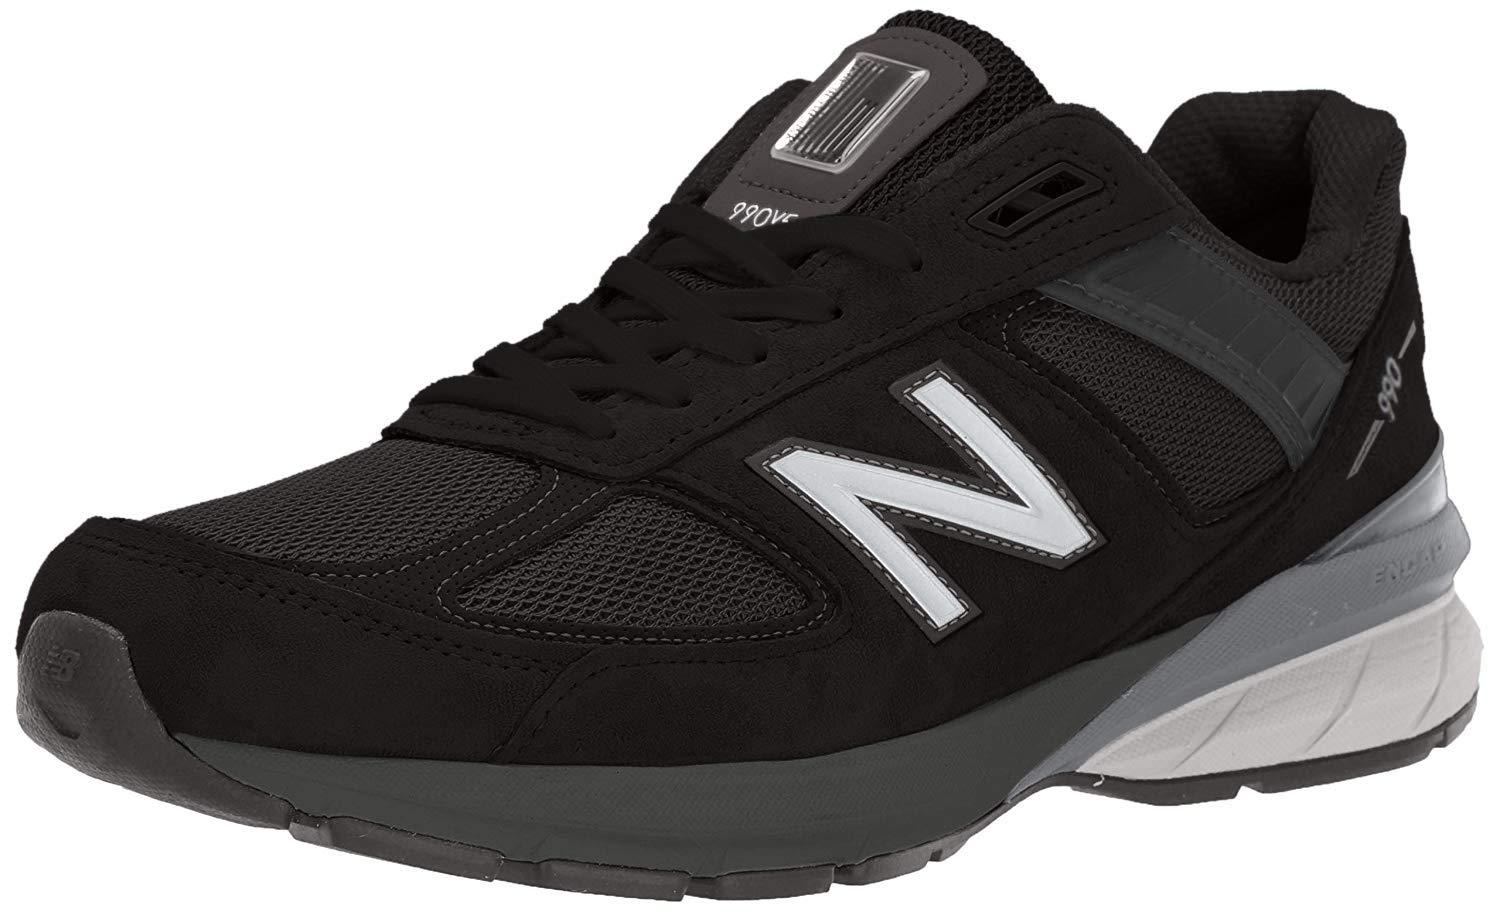 New Balance Rubber Made 990 V5 Sneaker in Black/Silver (Black) for Men ...